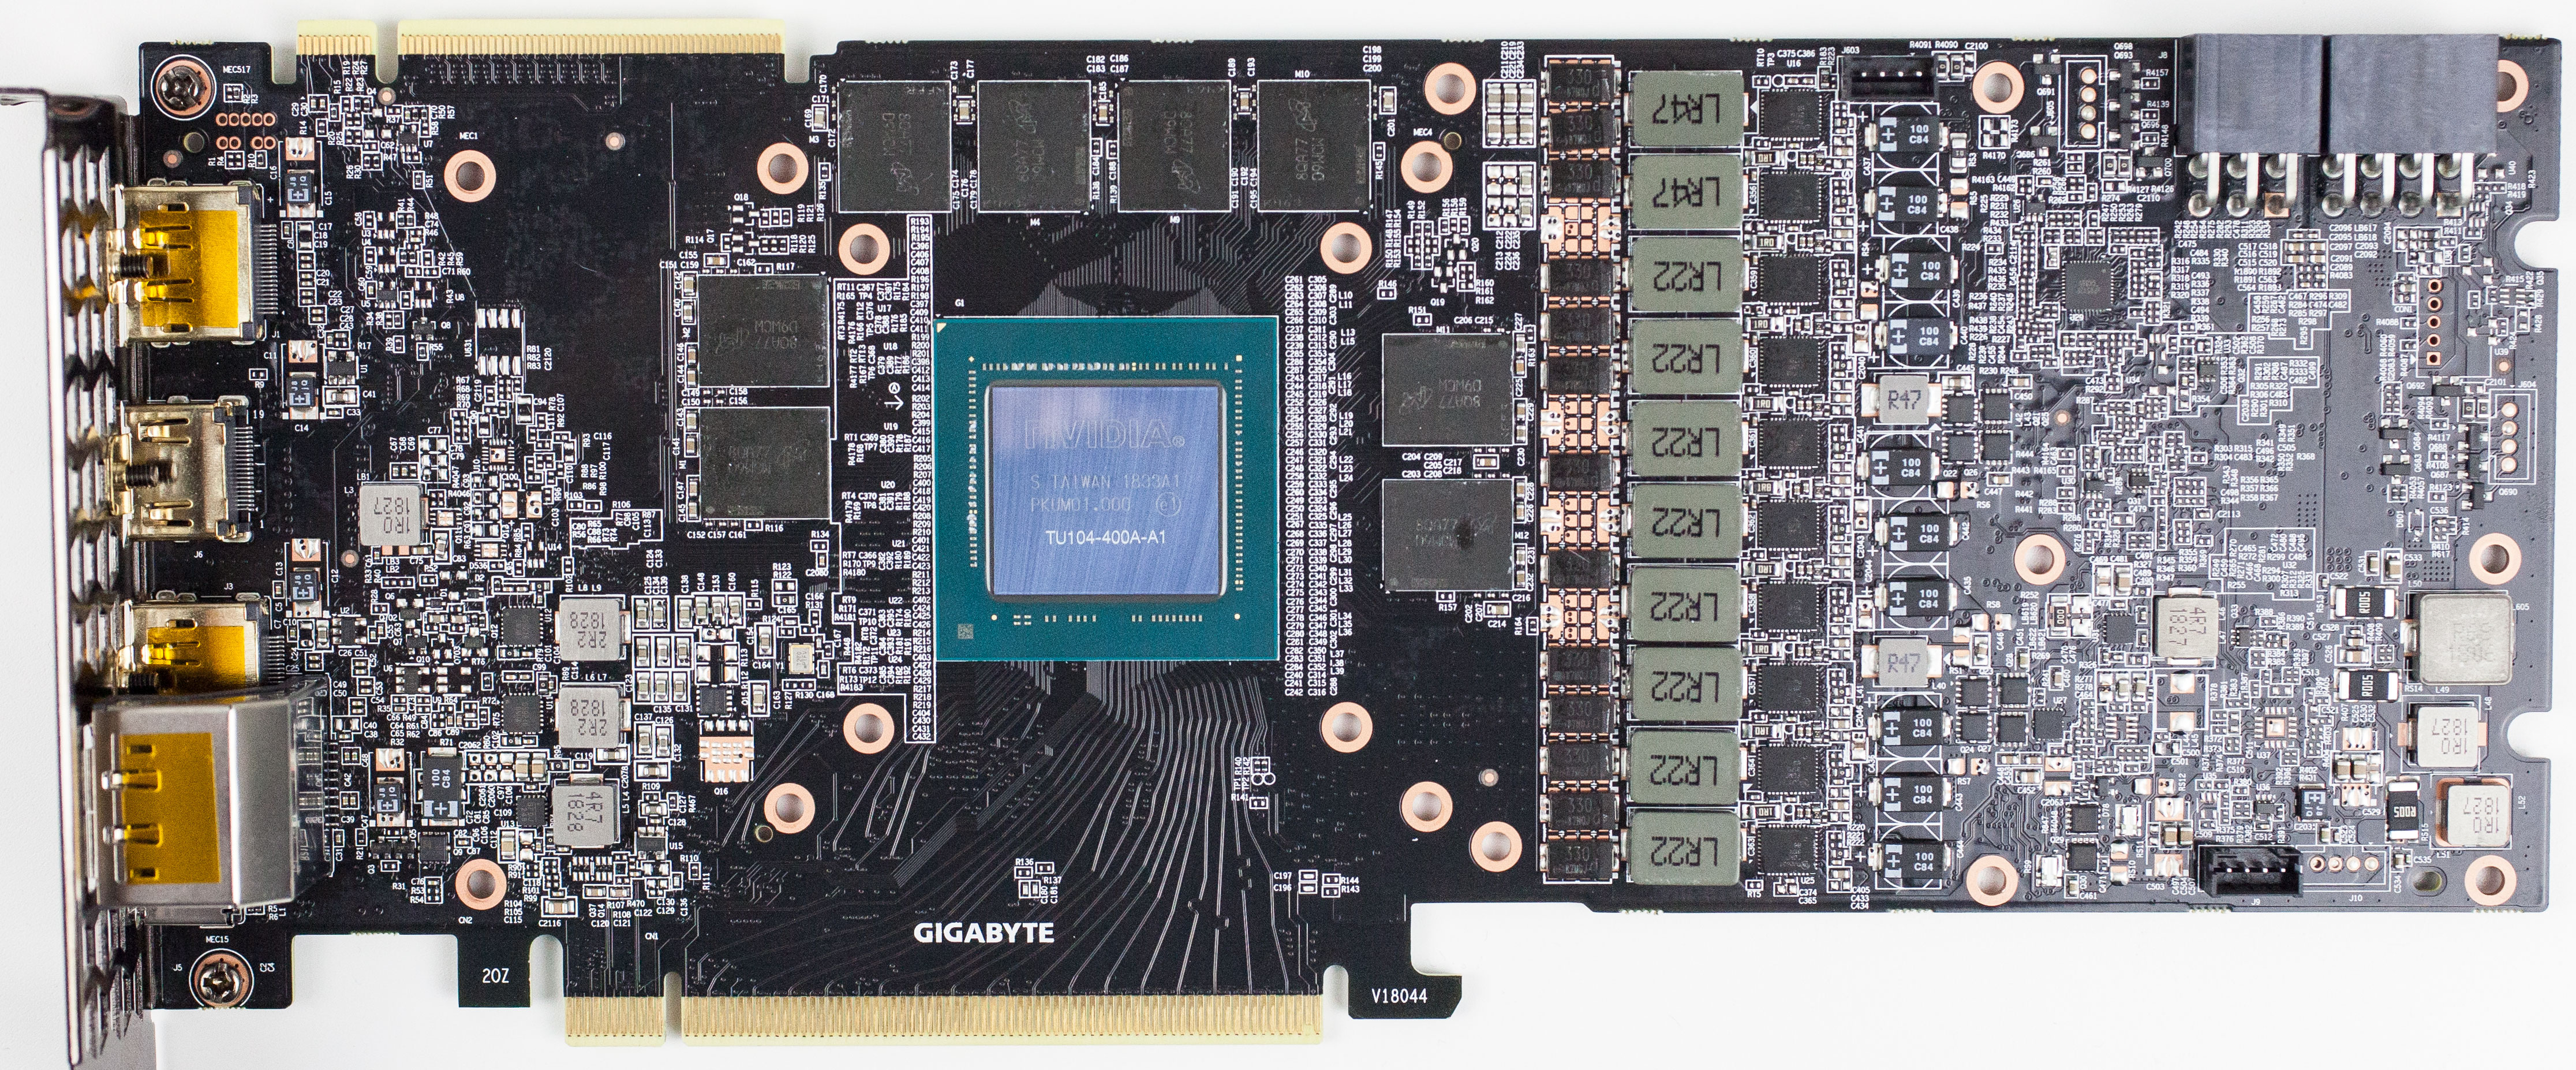 Monarch underjordisk kondom Gigabyte GeForce RTX 2080 Gaming OC 8 GB Review - Circuit Board Analysis |  TechPowerUp